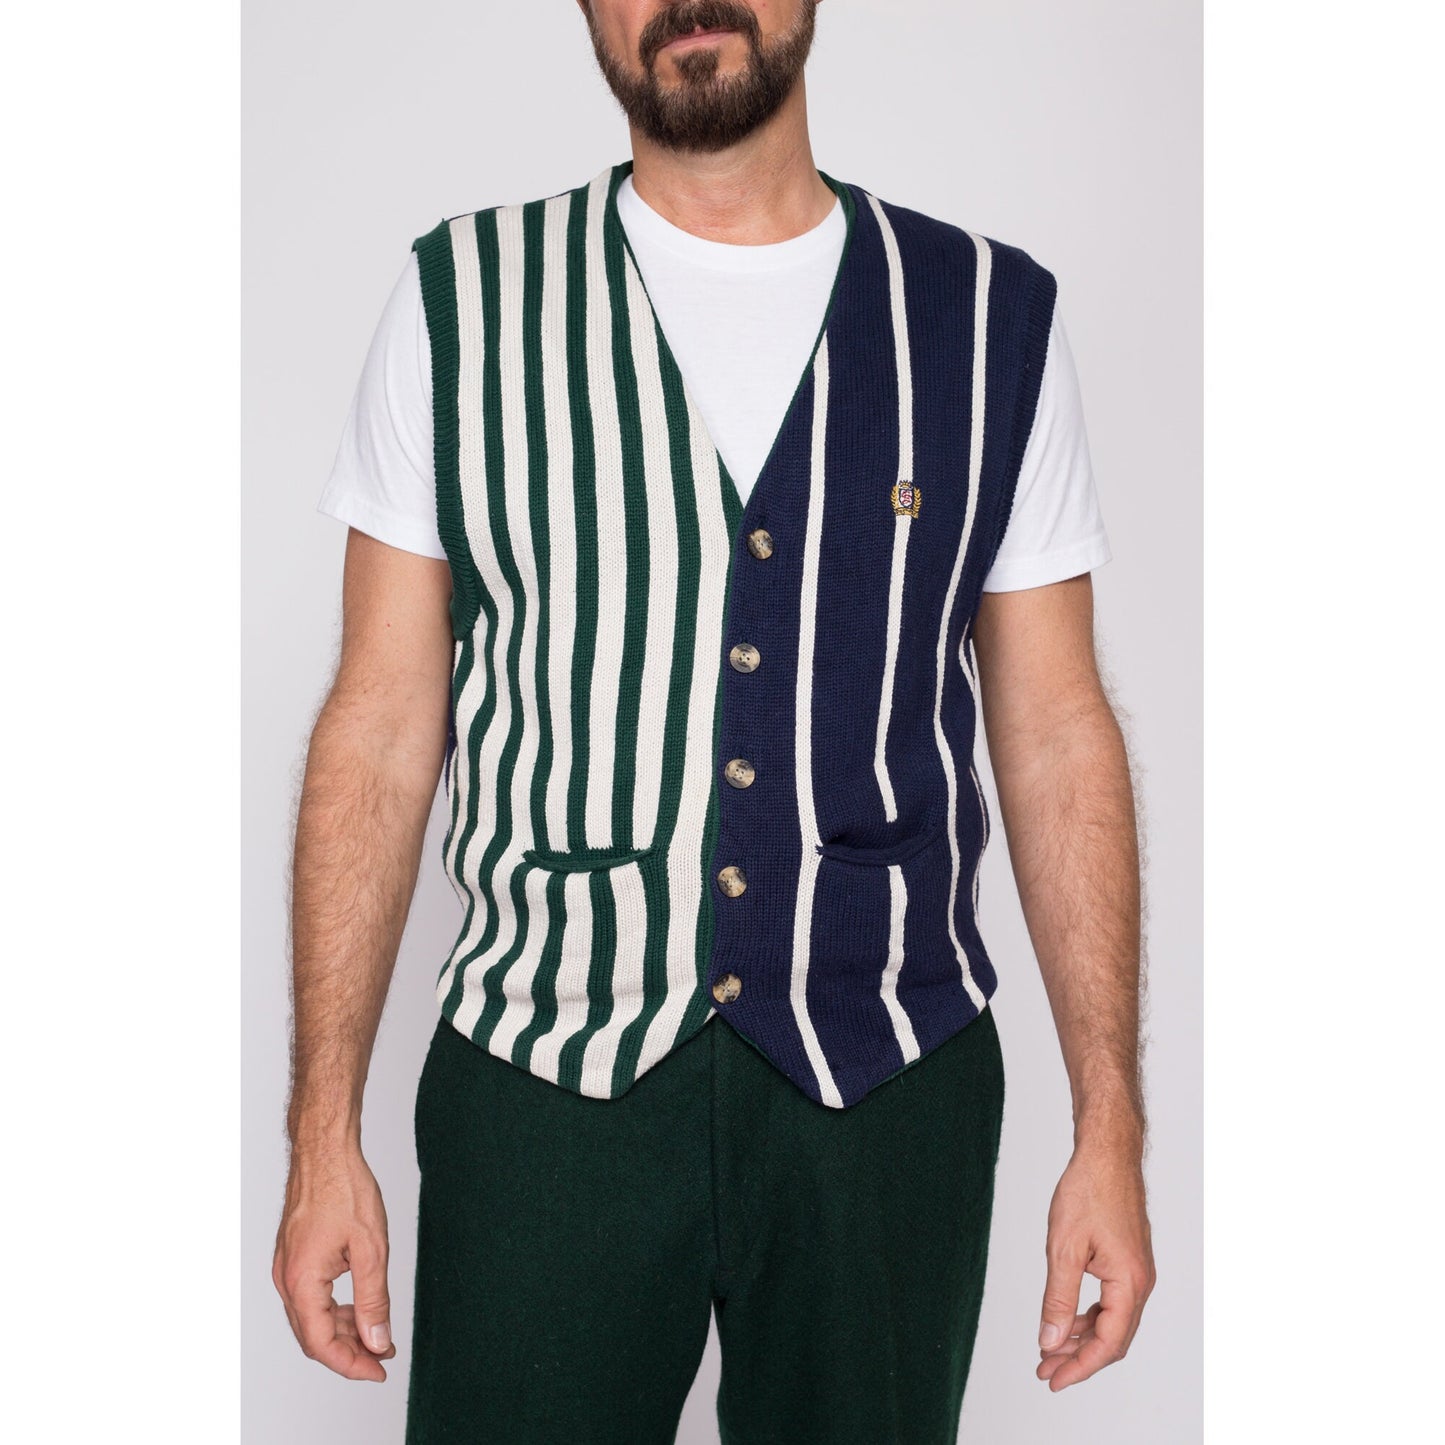 M| 80s Striped Cotton Knit Sweater Vest - Men's Medium | Vintage Blue Green Button Up V Neck Sleeveless Cardigan